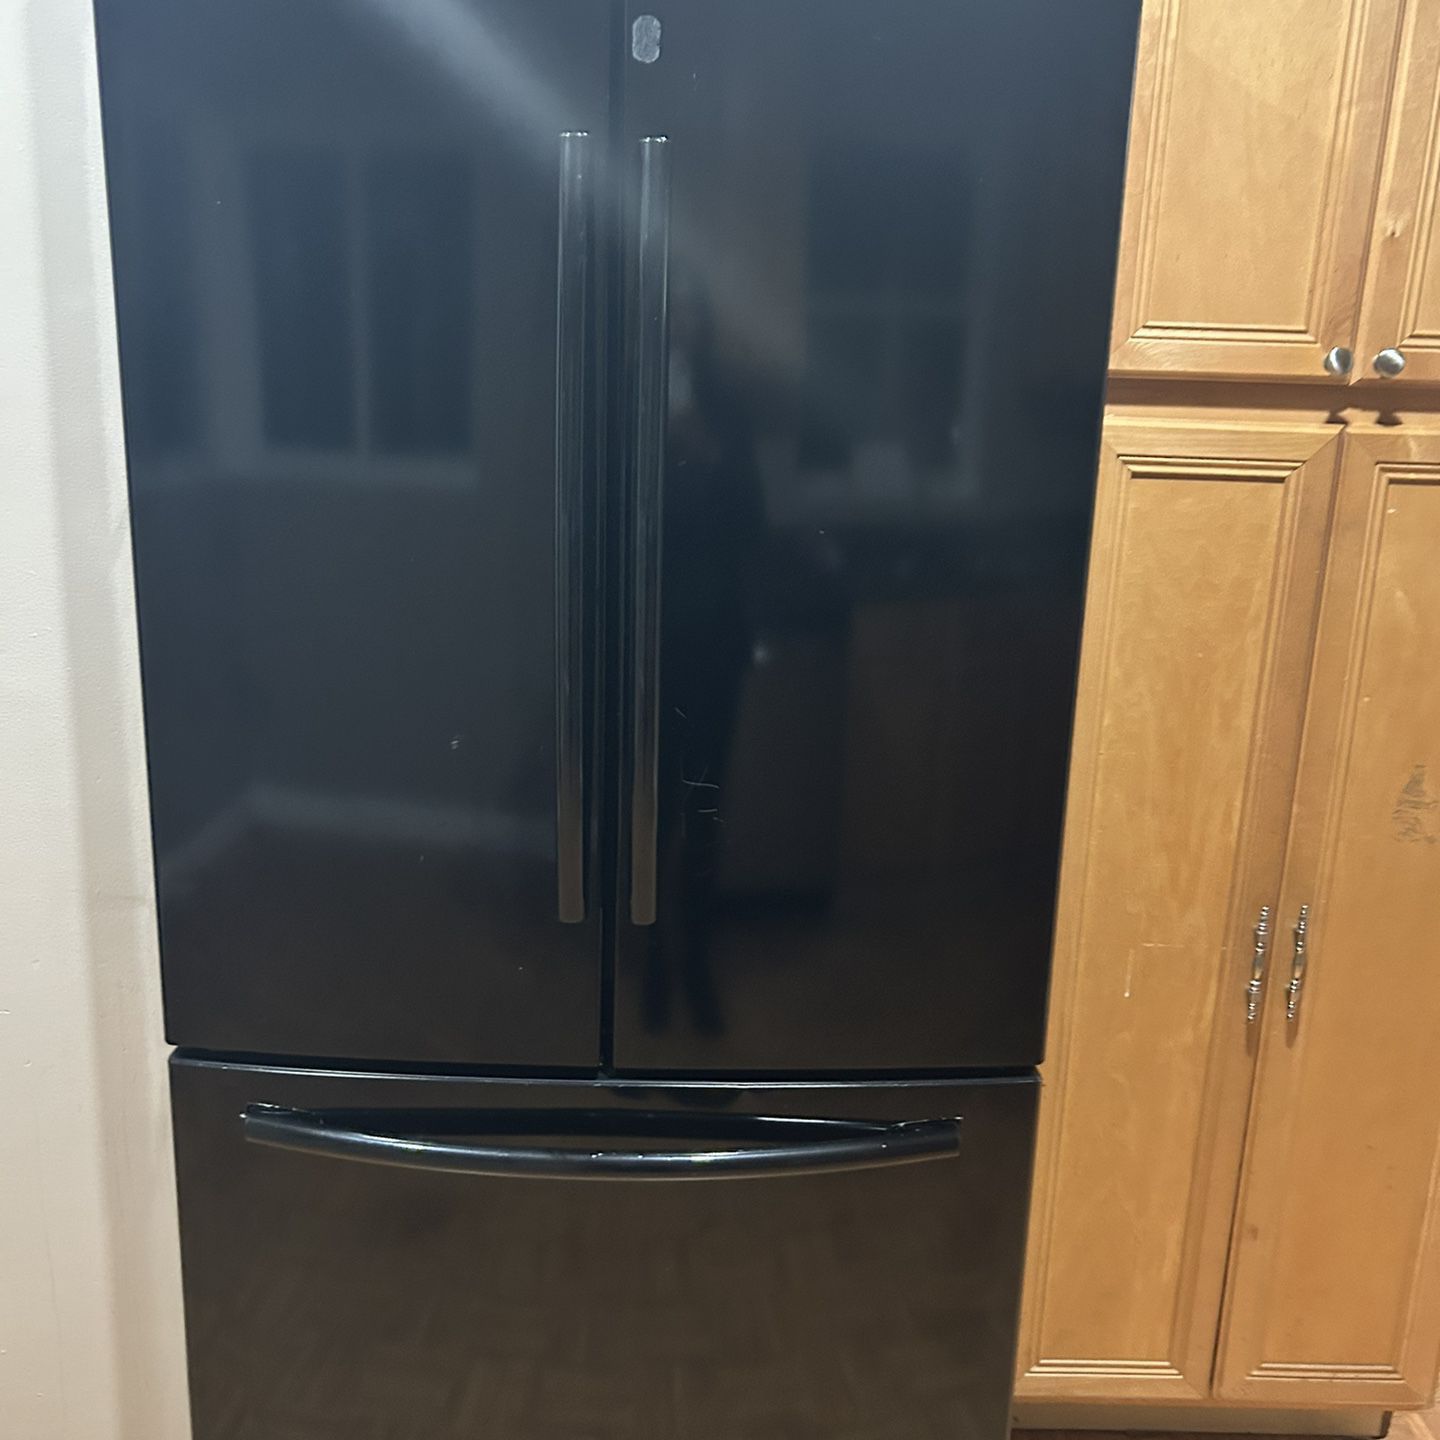 Samsung French Door Black Refrigerator $400